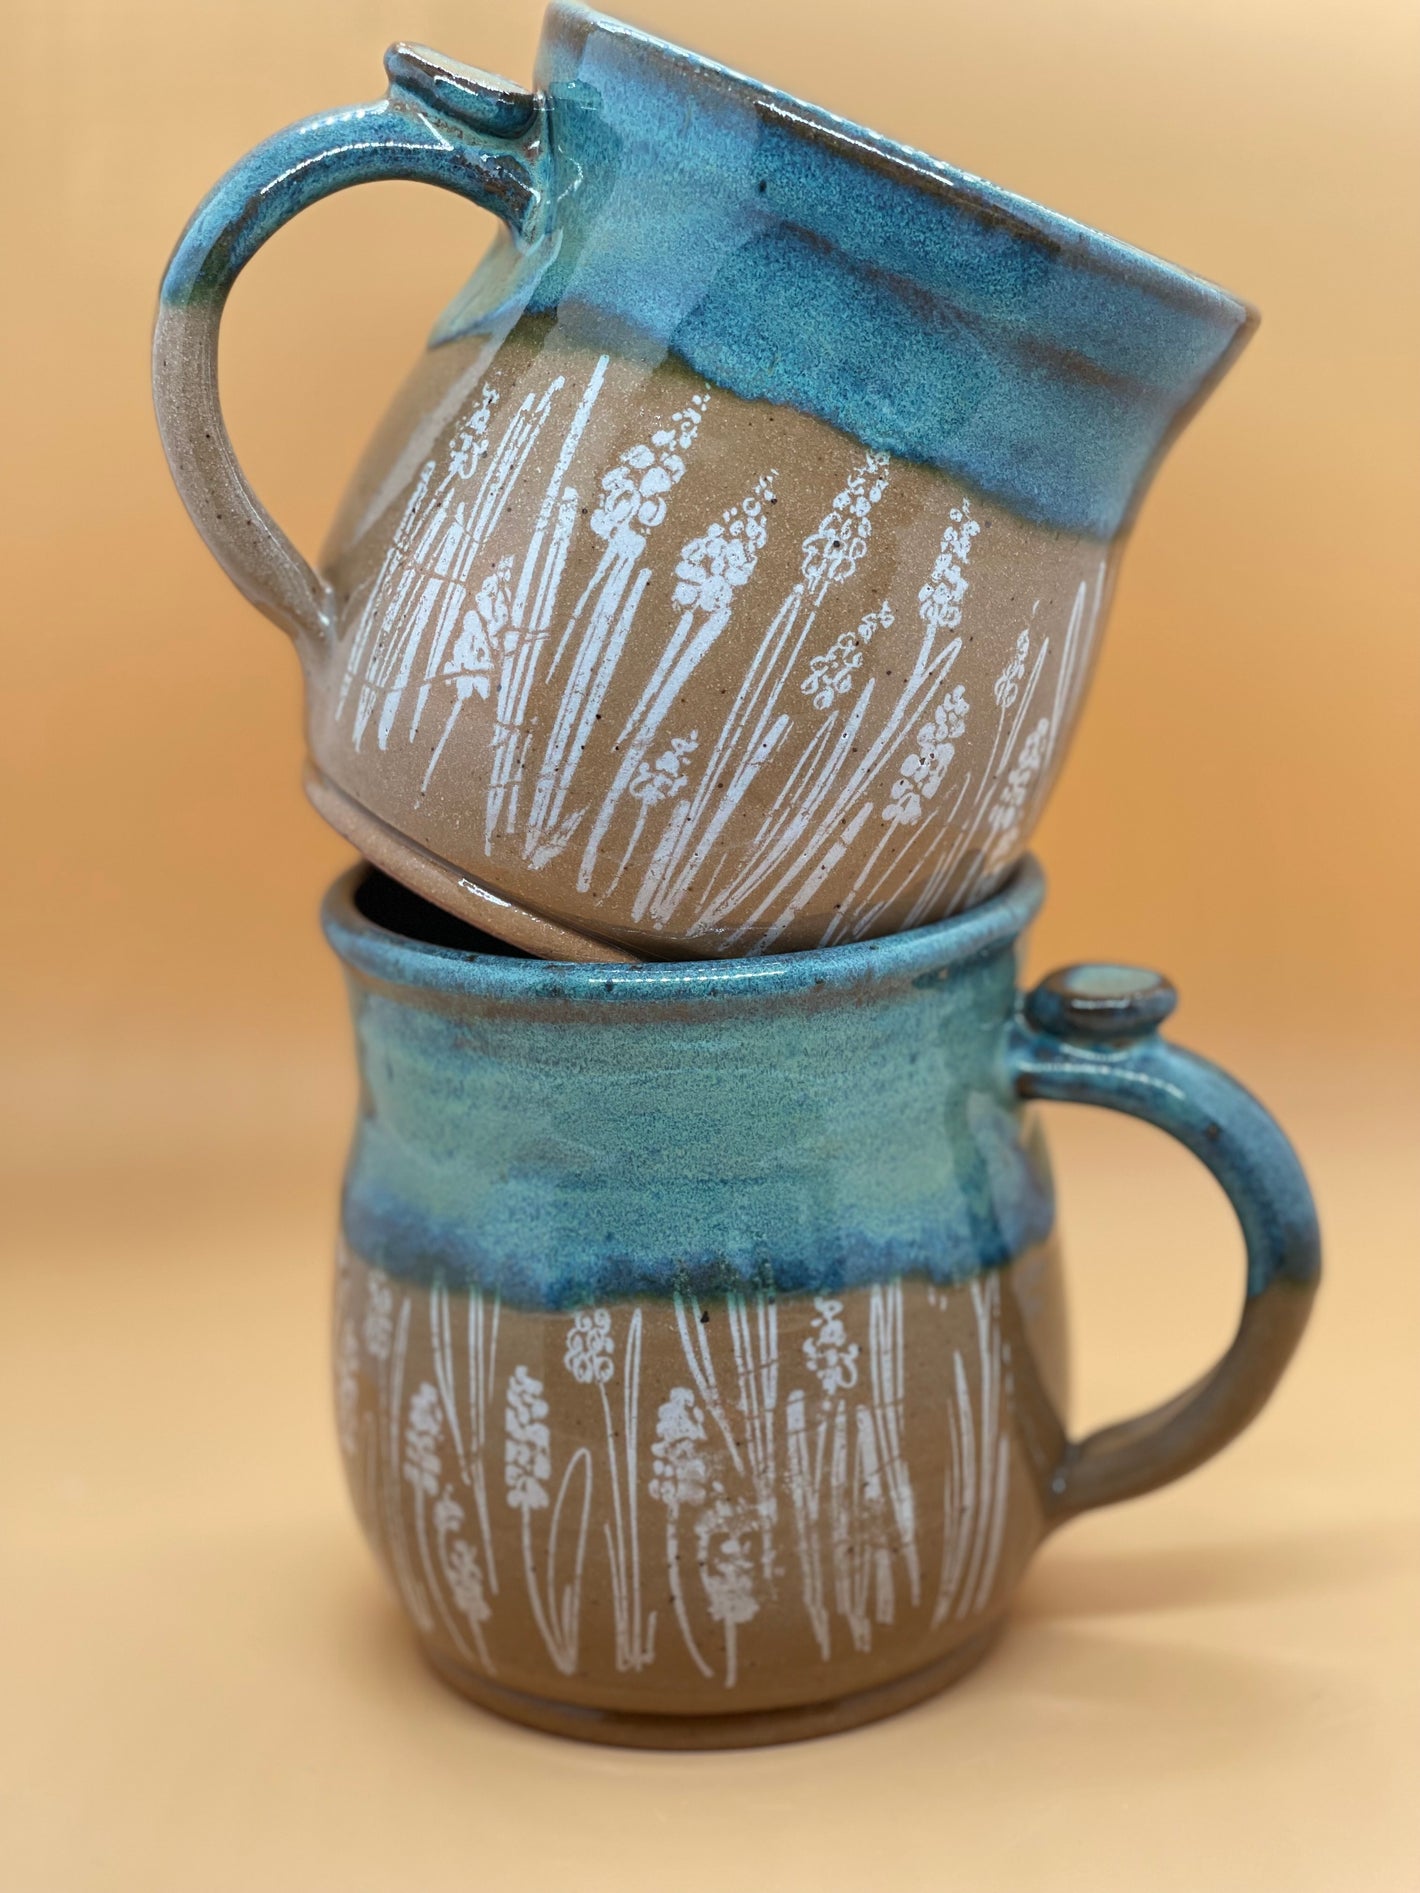 mountain ridge pottery mugs with graphics